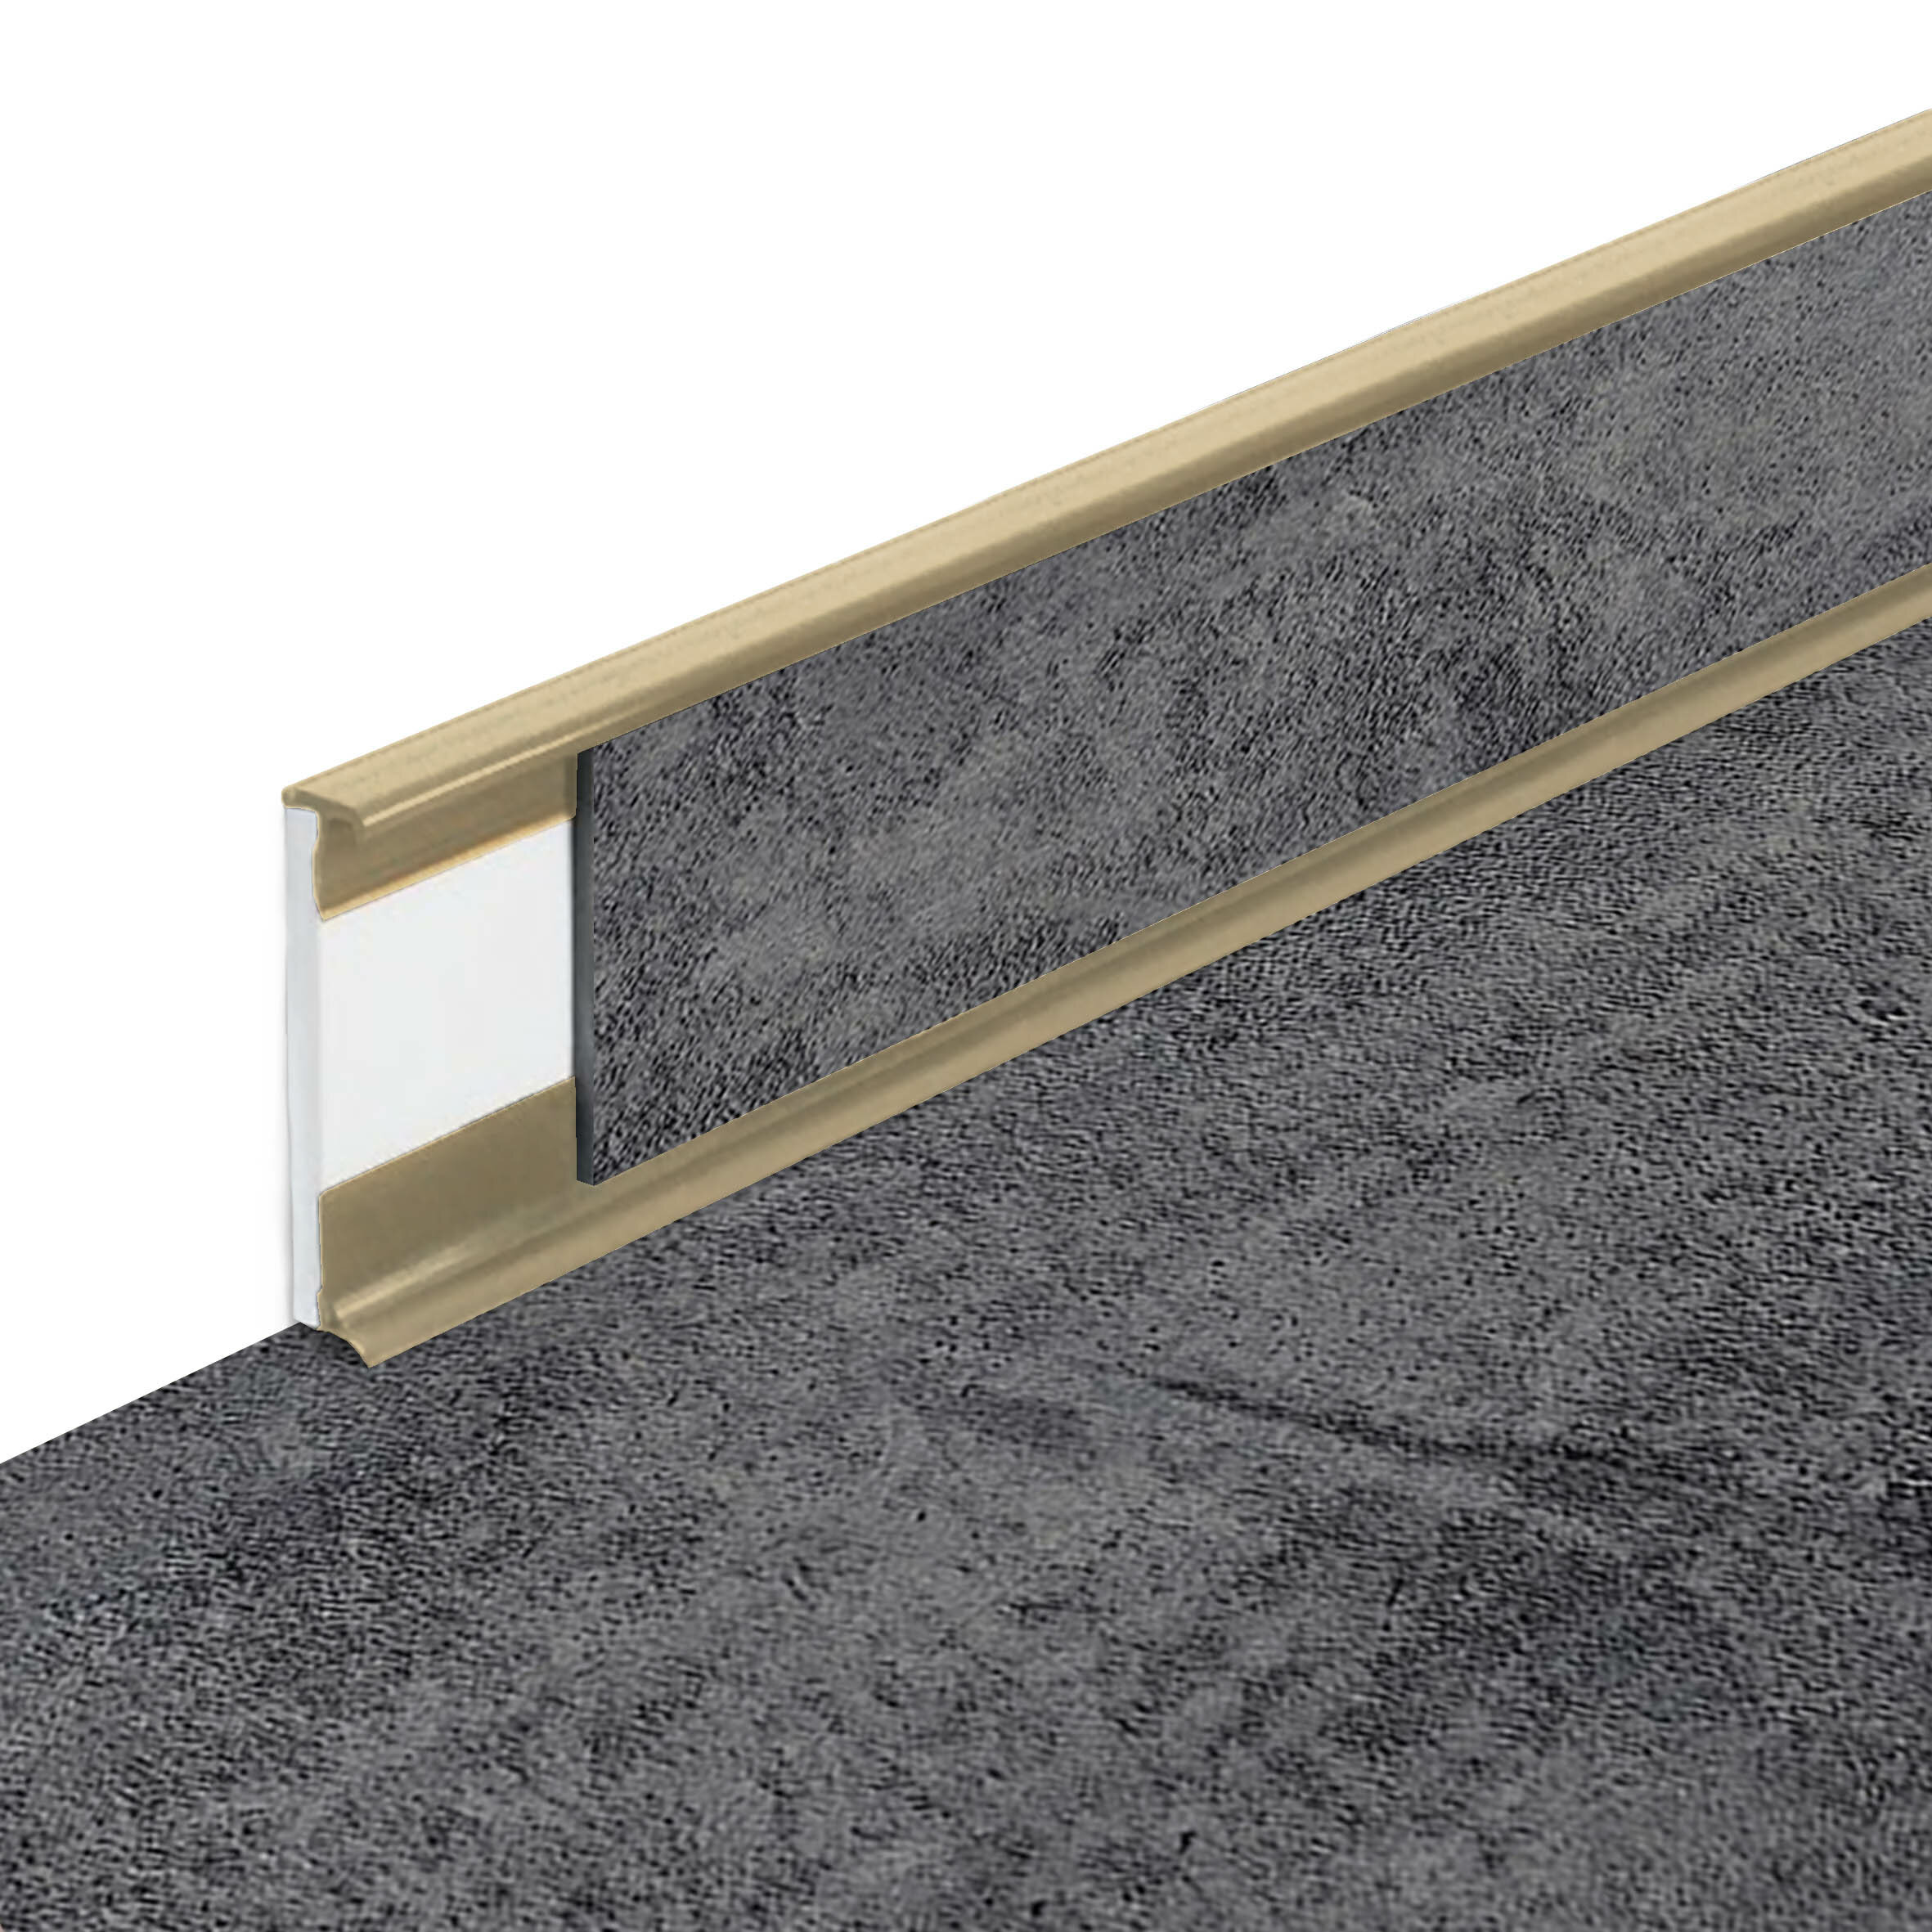 PVC vinylová soklová podlahová lišta Fortelock Business Forsen Rugged Canyon C021 Beige - dĺžka 200 cm, výška 5,8 cm, hrúbka 1,2 cm